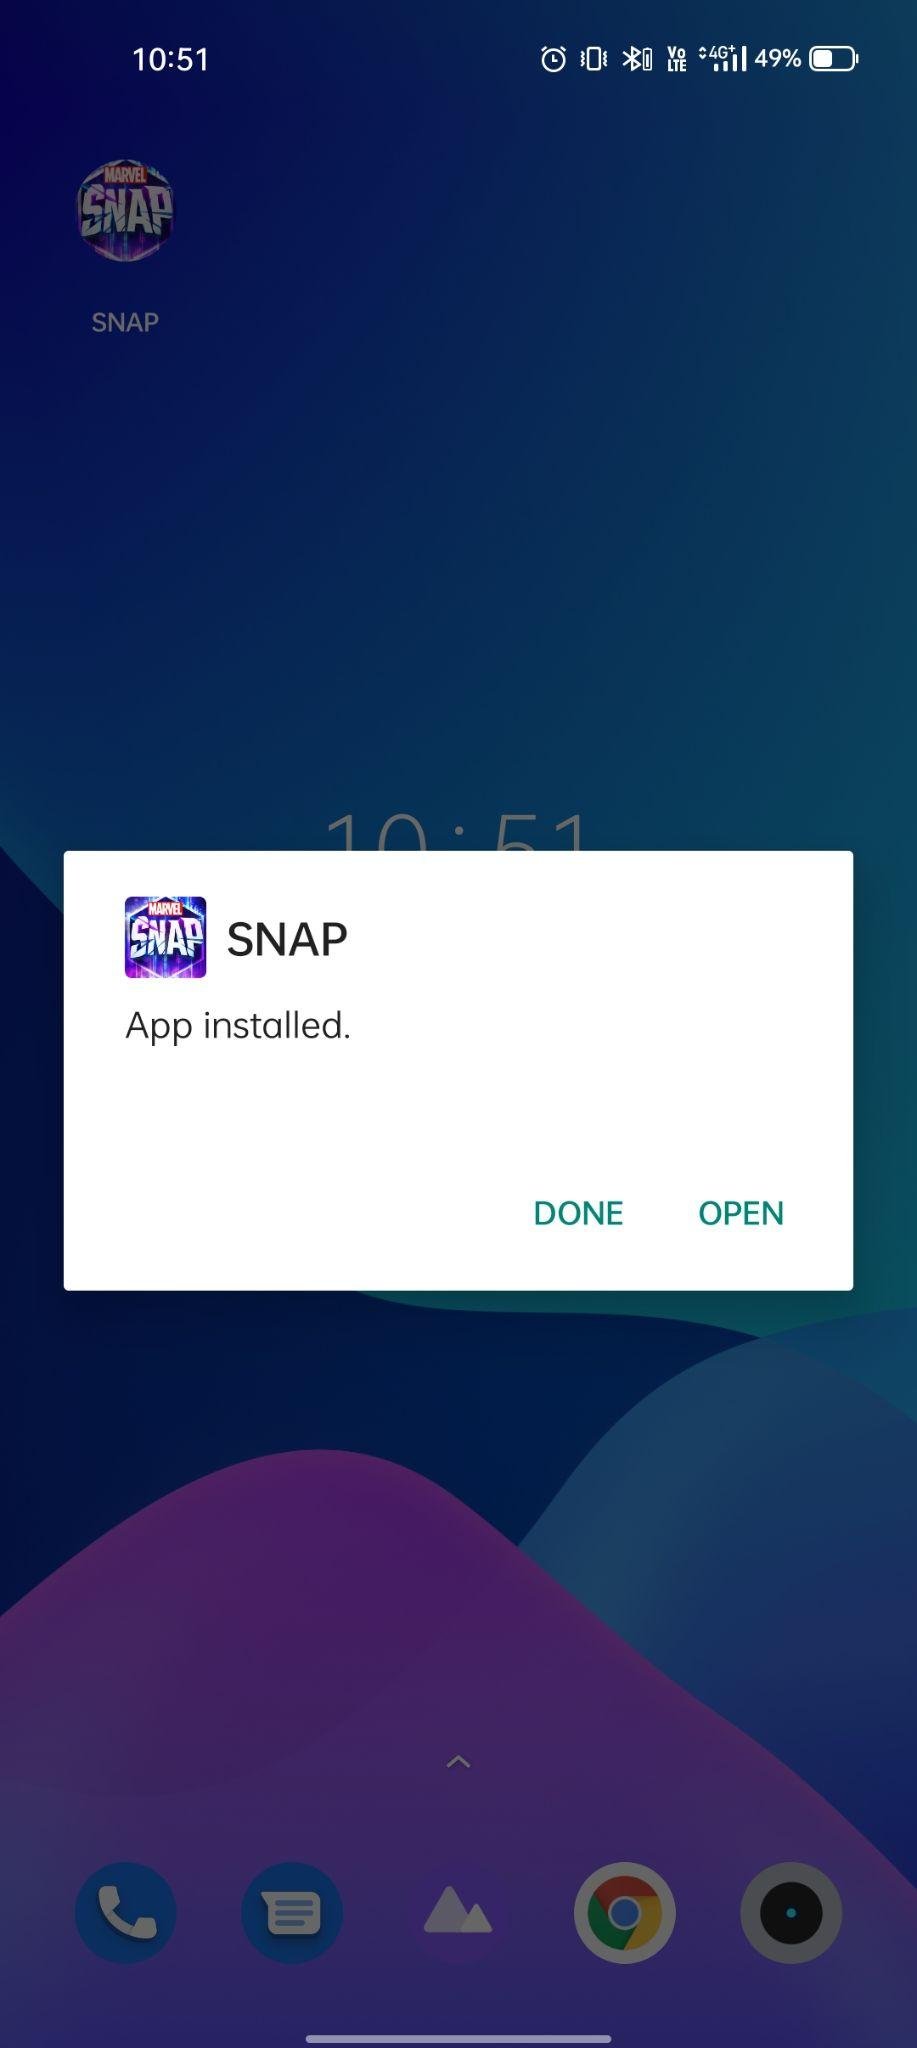 snap apk installed